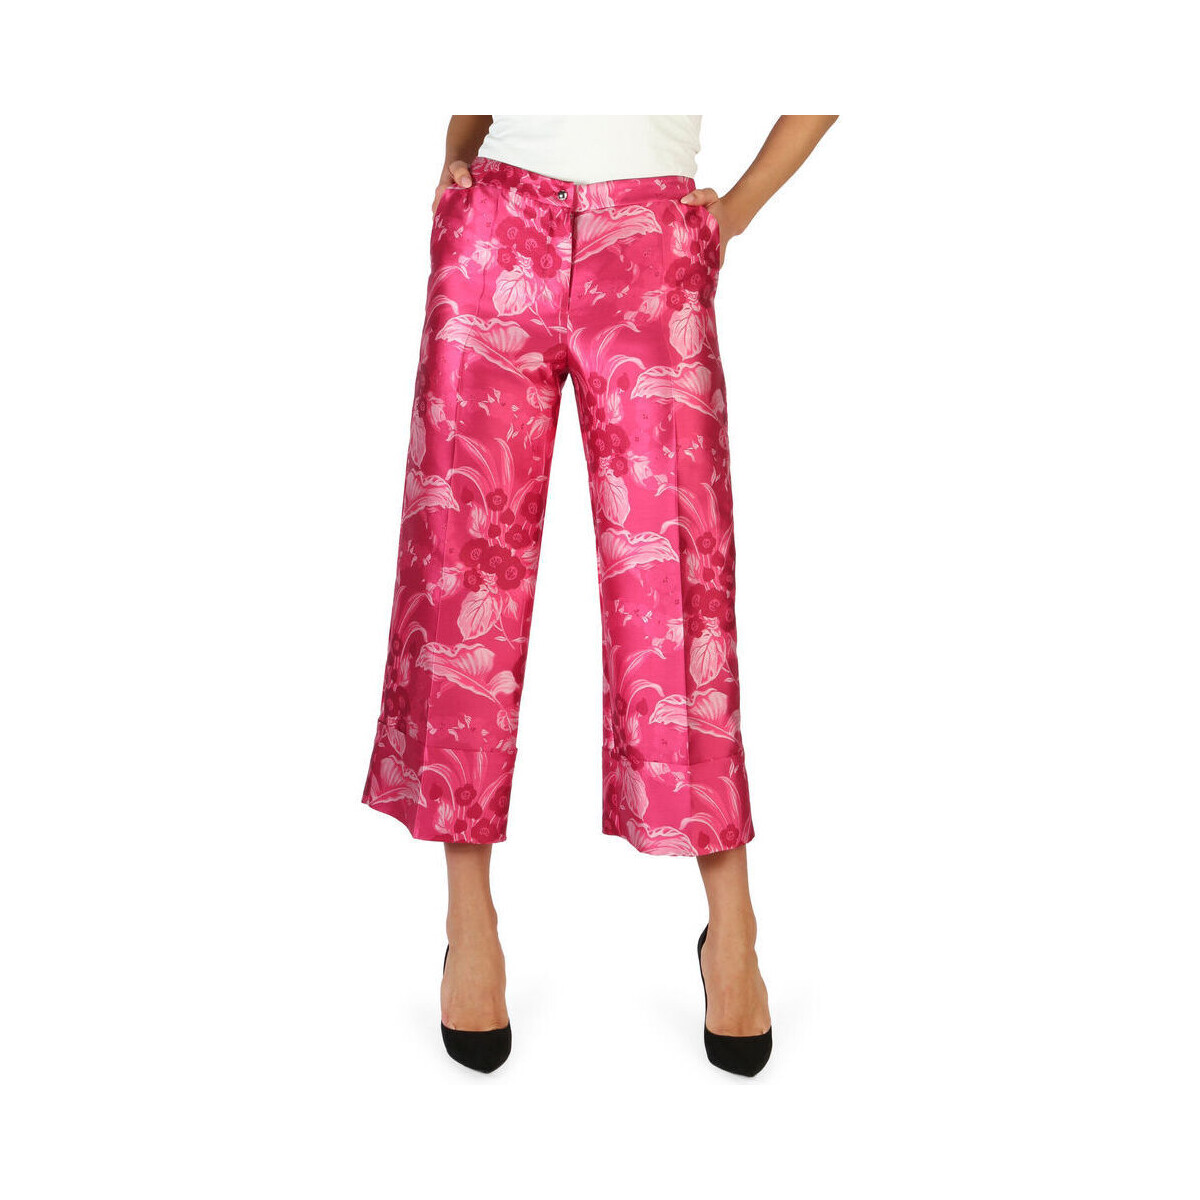 Textiel Dames Broeken / Pantalons Fontana - melissa Roze